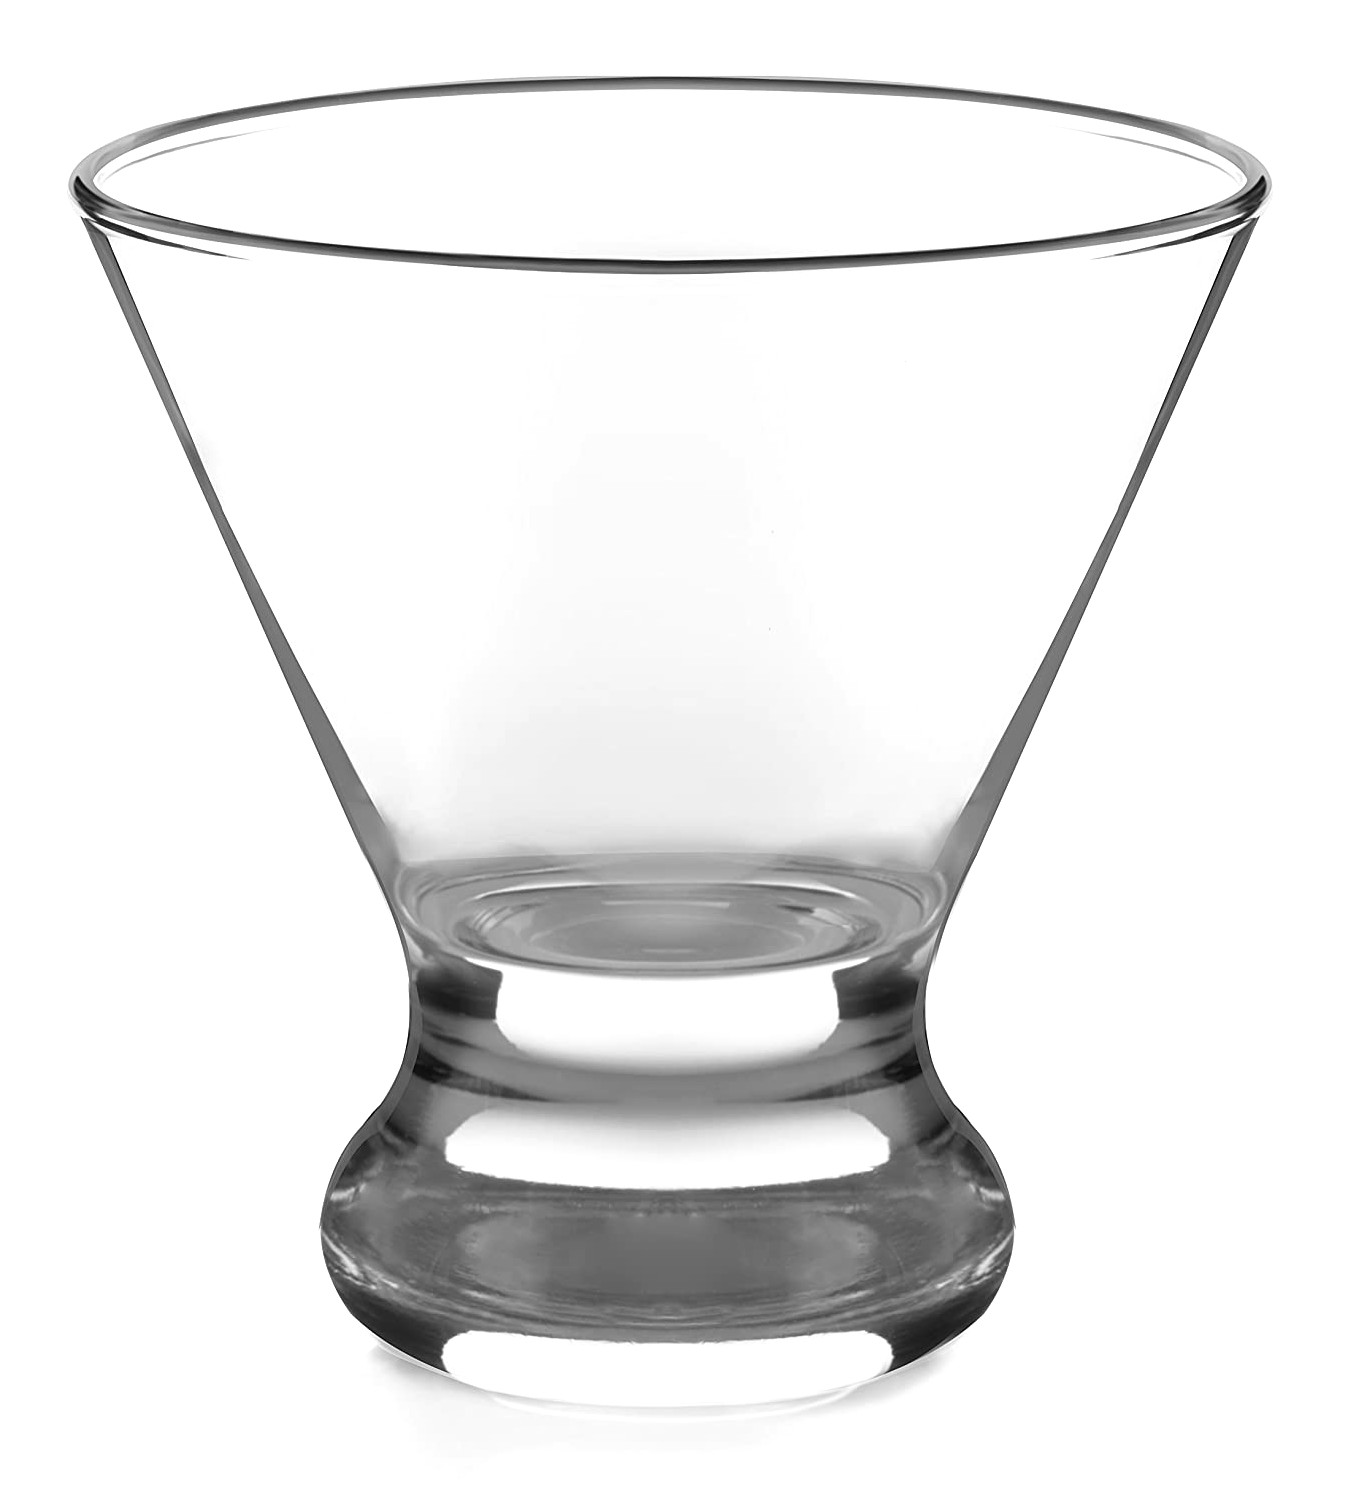 https://www.hansonellis.com/mm5/graphics/00000001/engraved-rhinestones-clear-stemless-martini-glass-cocktail.jpg